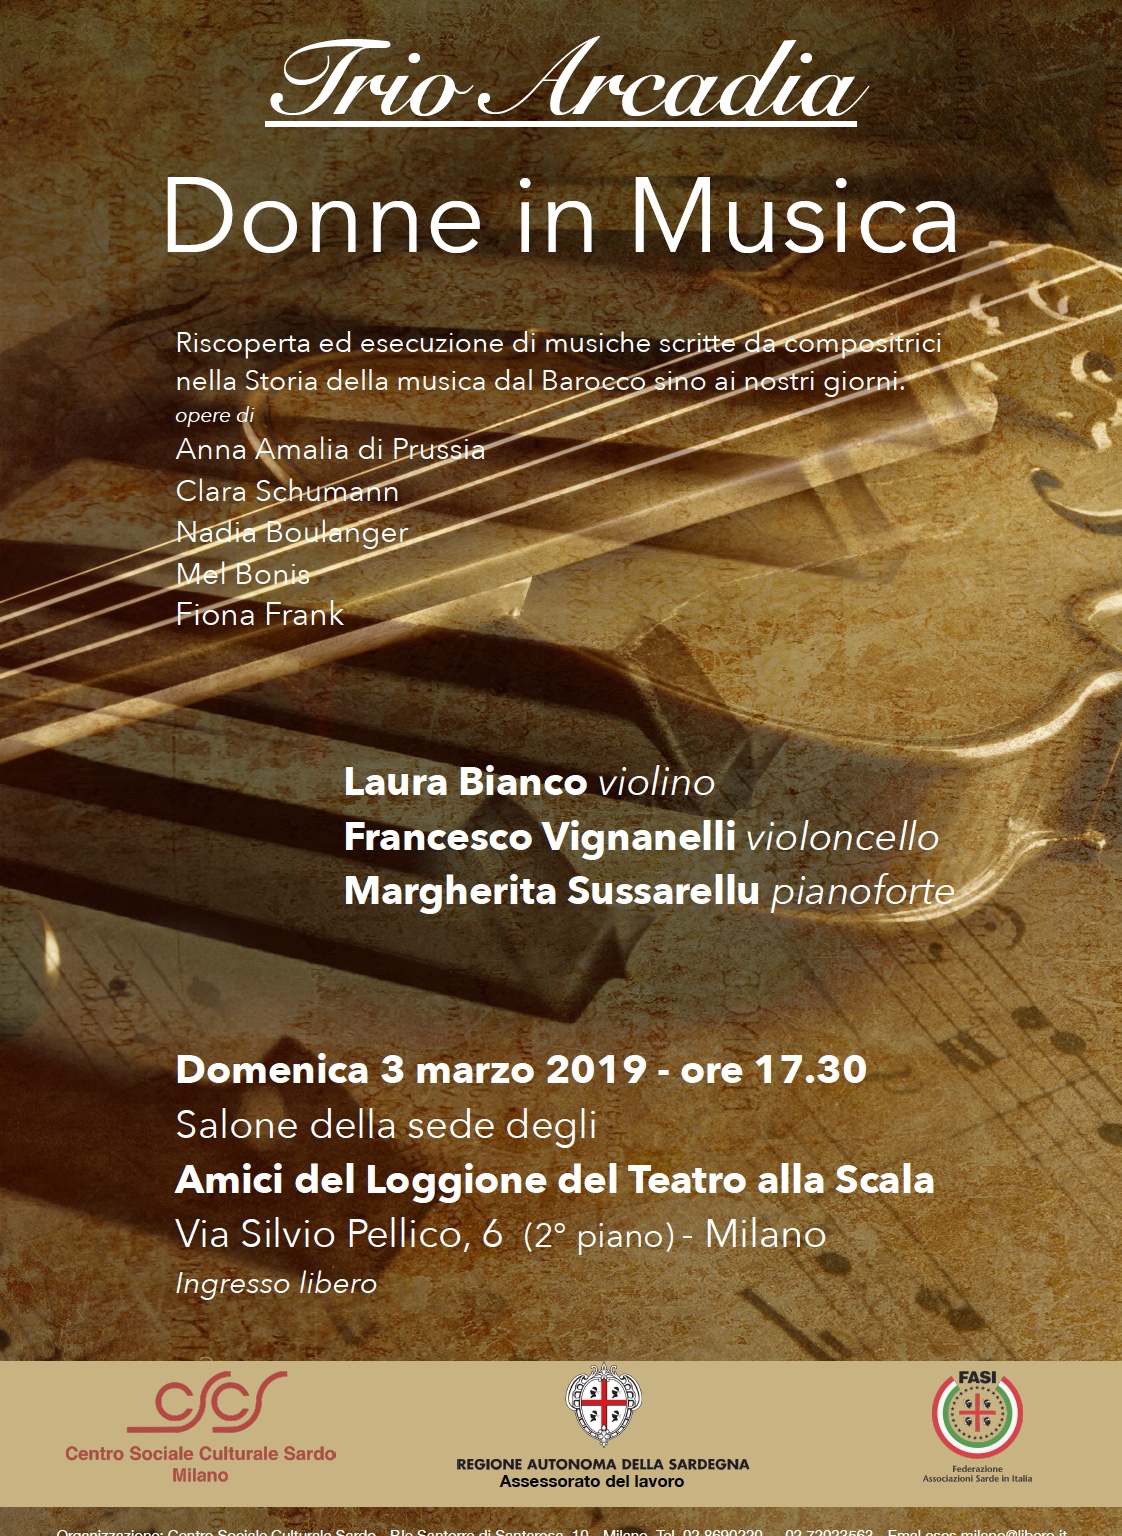 Poster for Milan concert